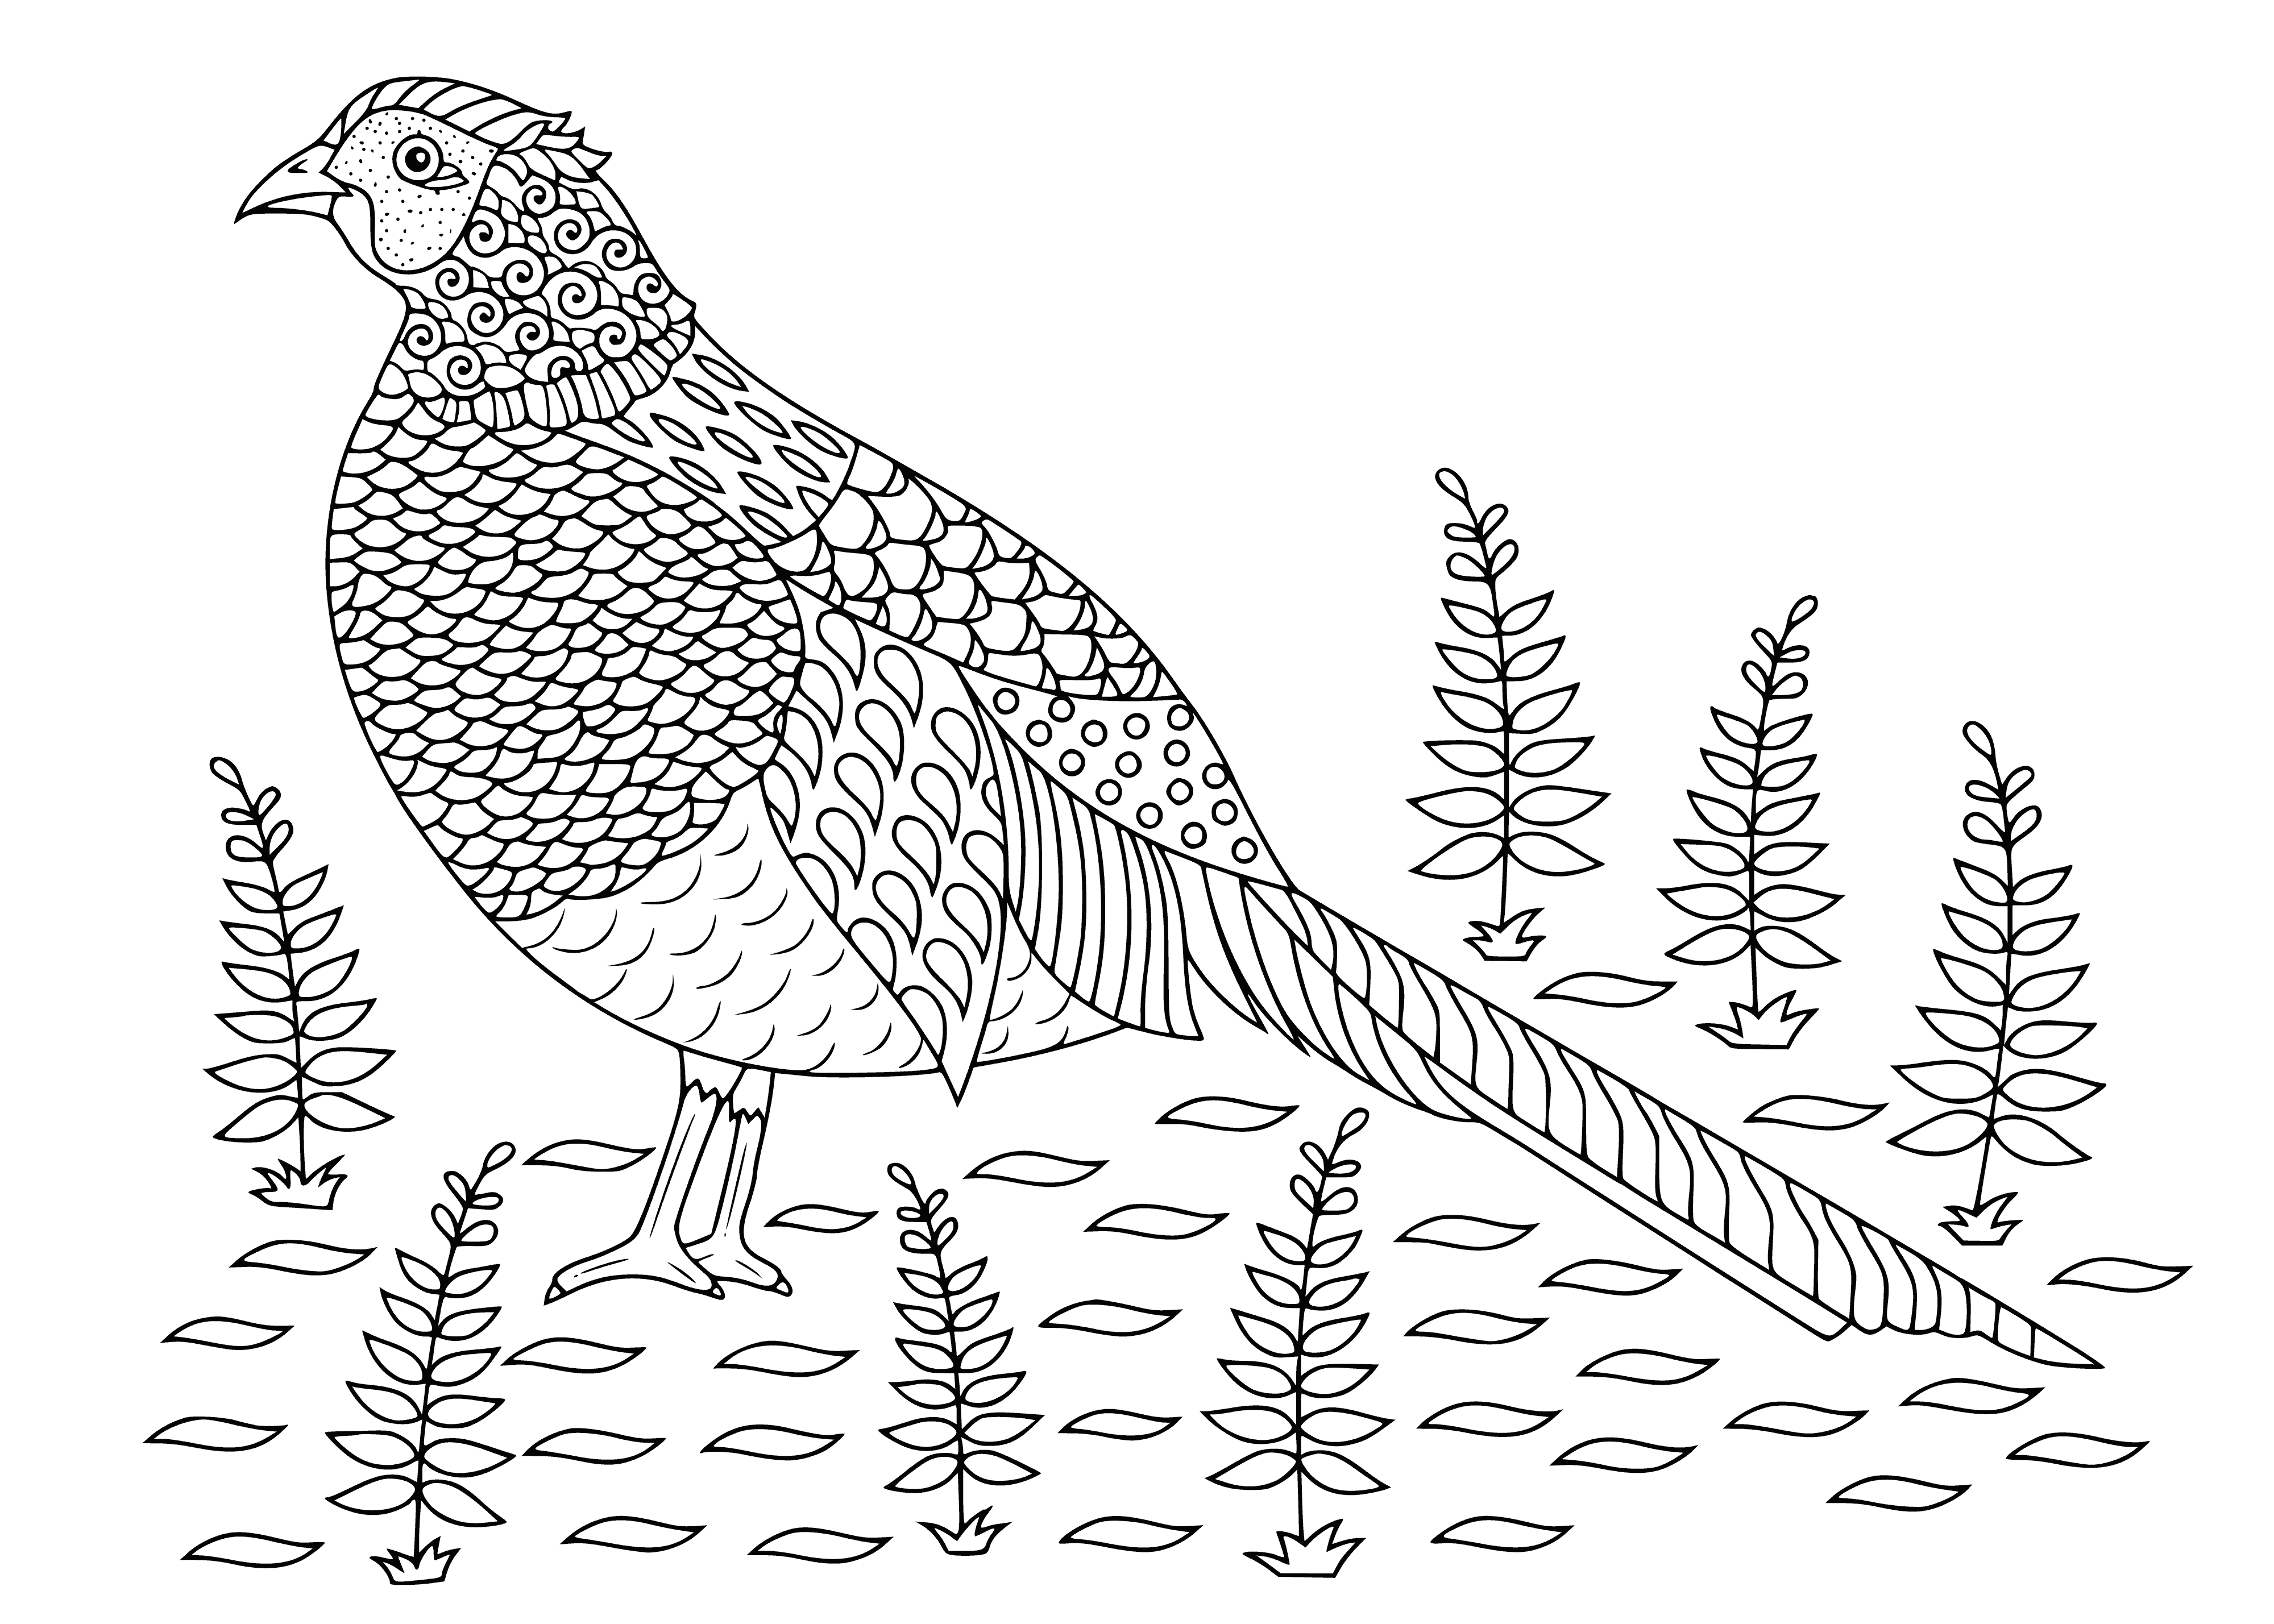 coloring page: Coloring page of a pheasant: big bird w/ long tail; brown & white; long neck & big beak.